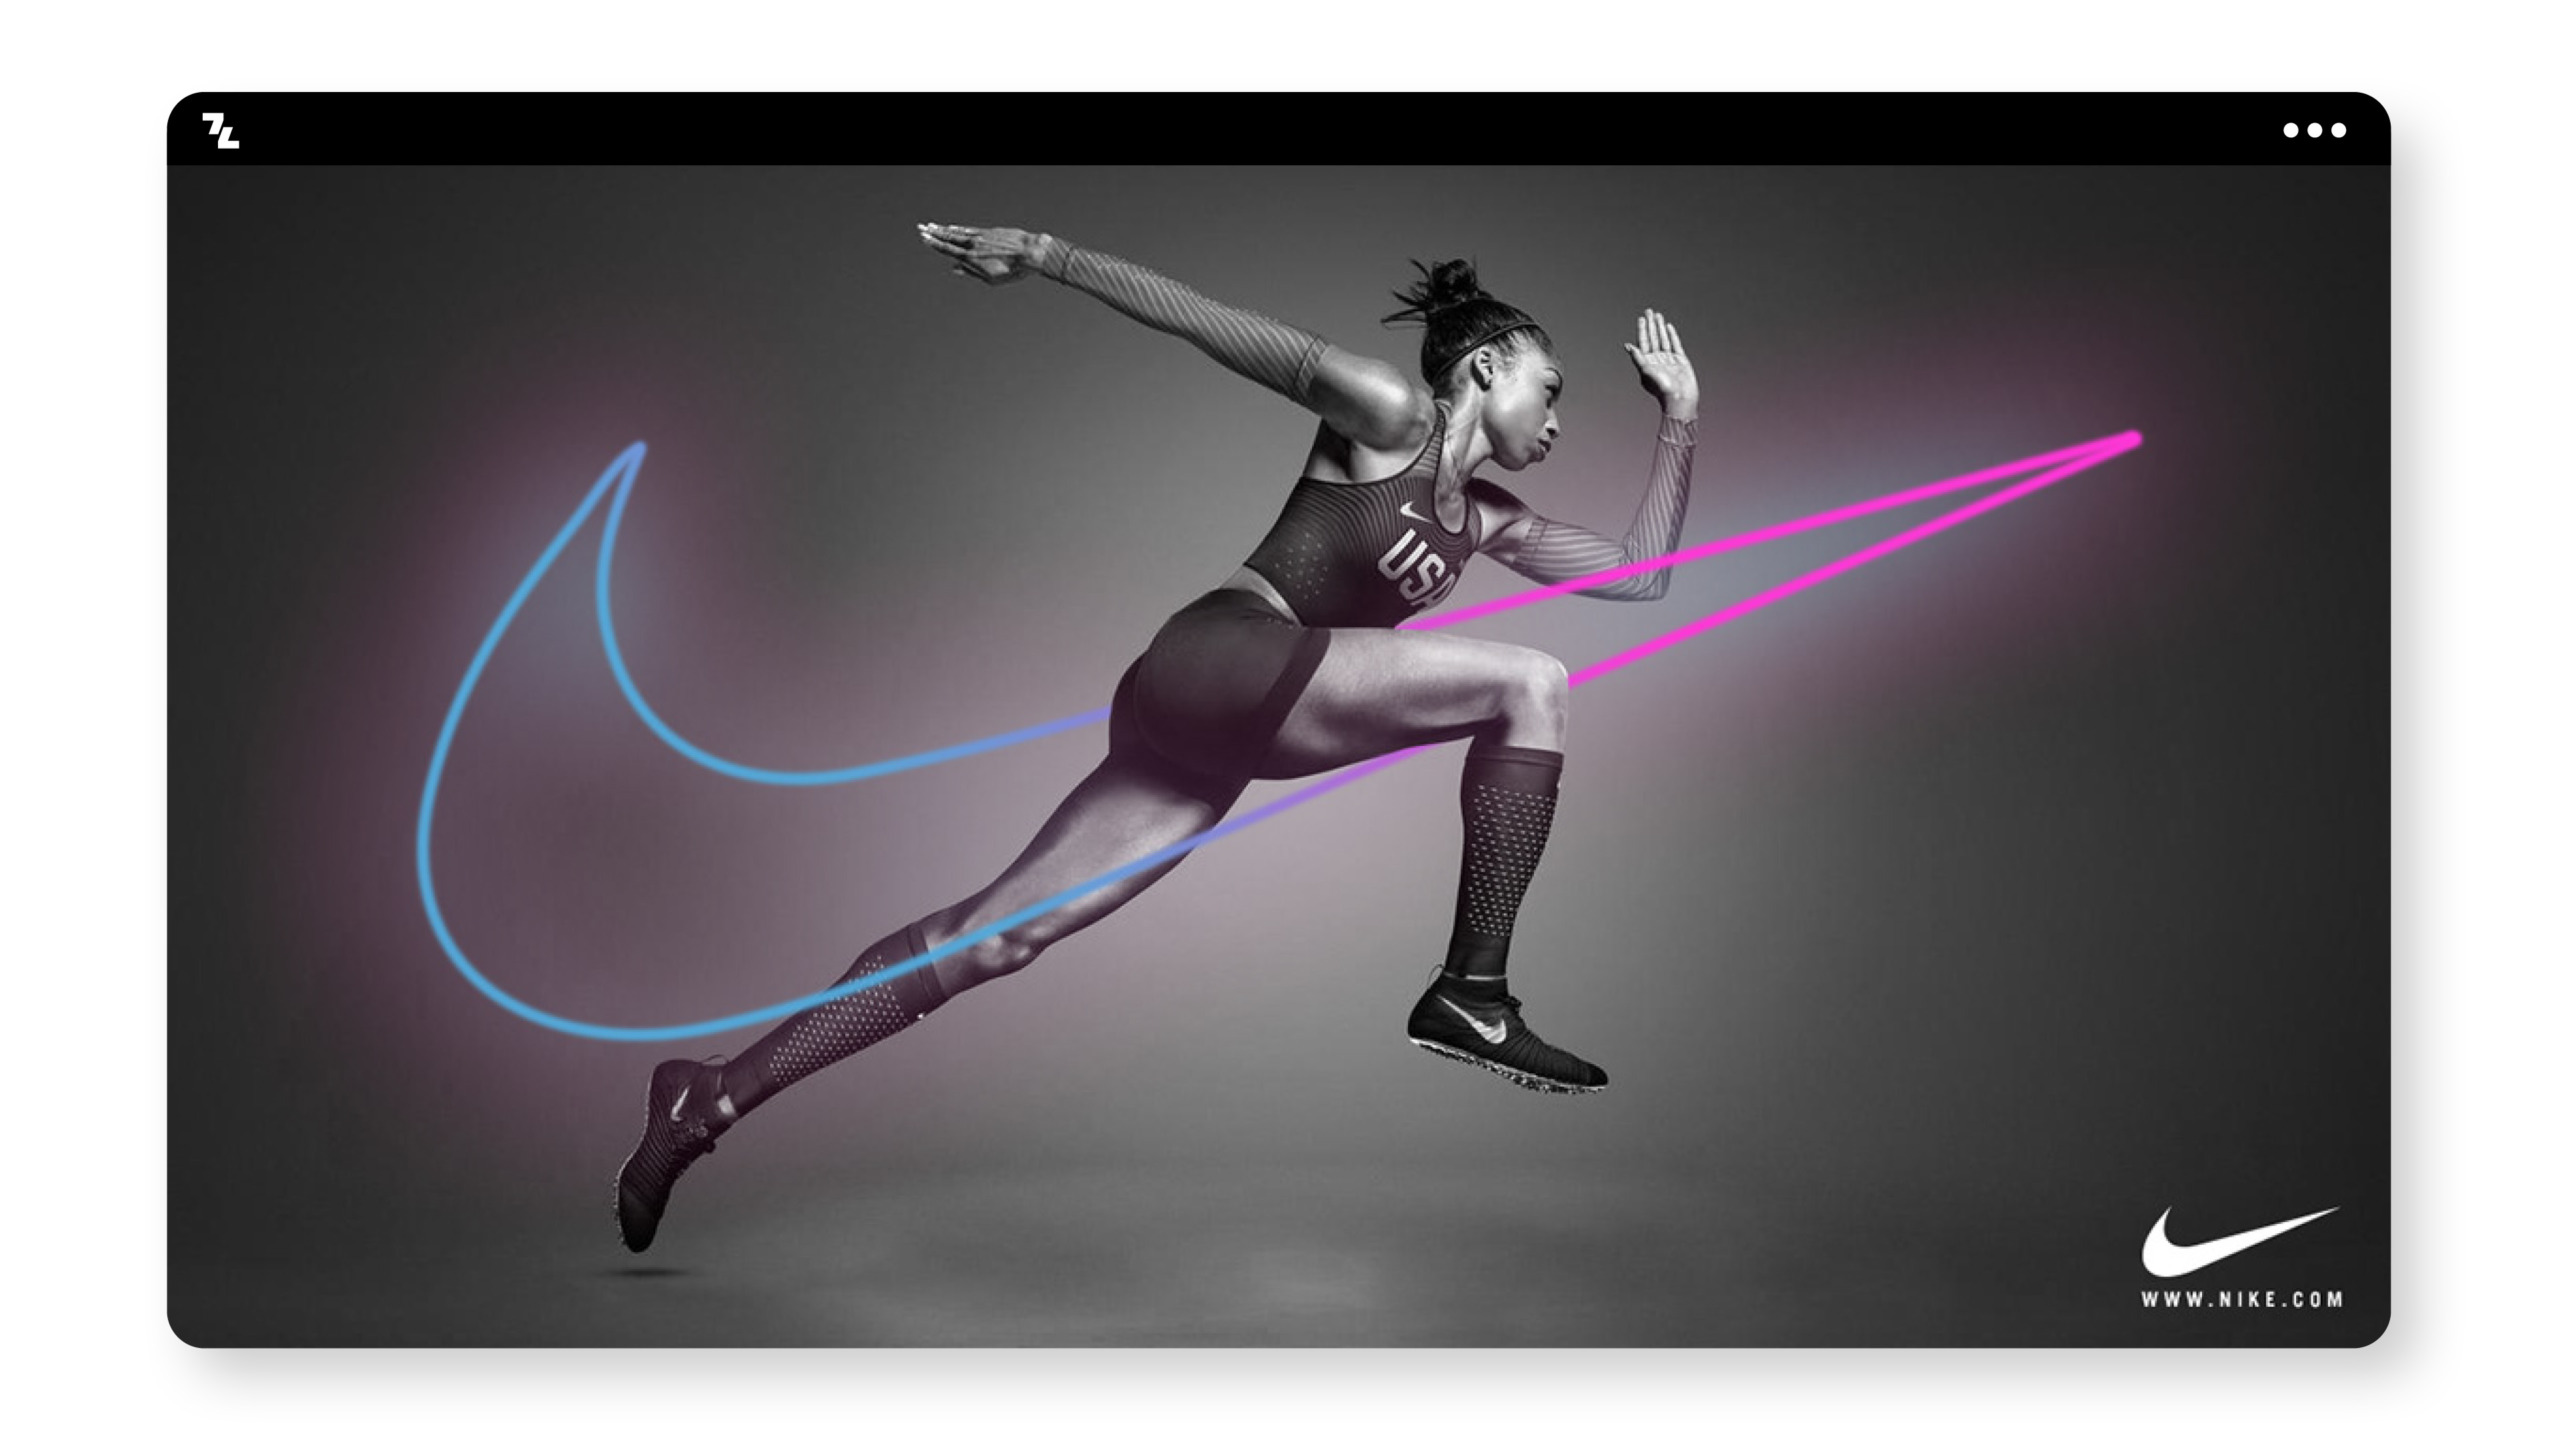 Nike branding logo on a computer screen.